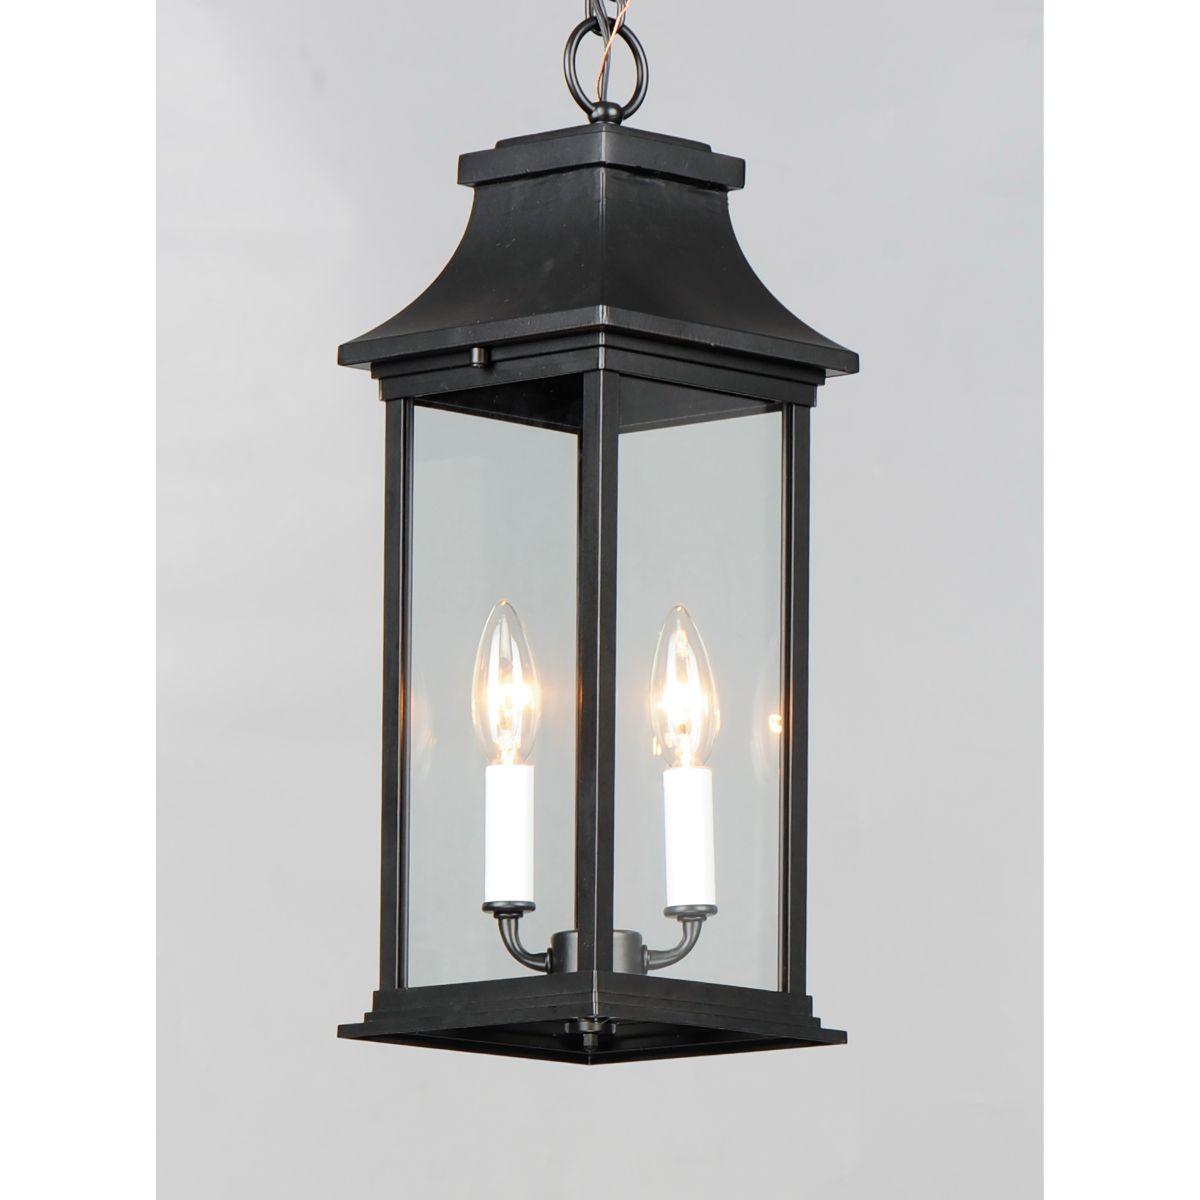 Vicksburg 19 in. 2 Lights Outdoor Hanging Lantern Black Finish